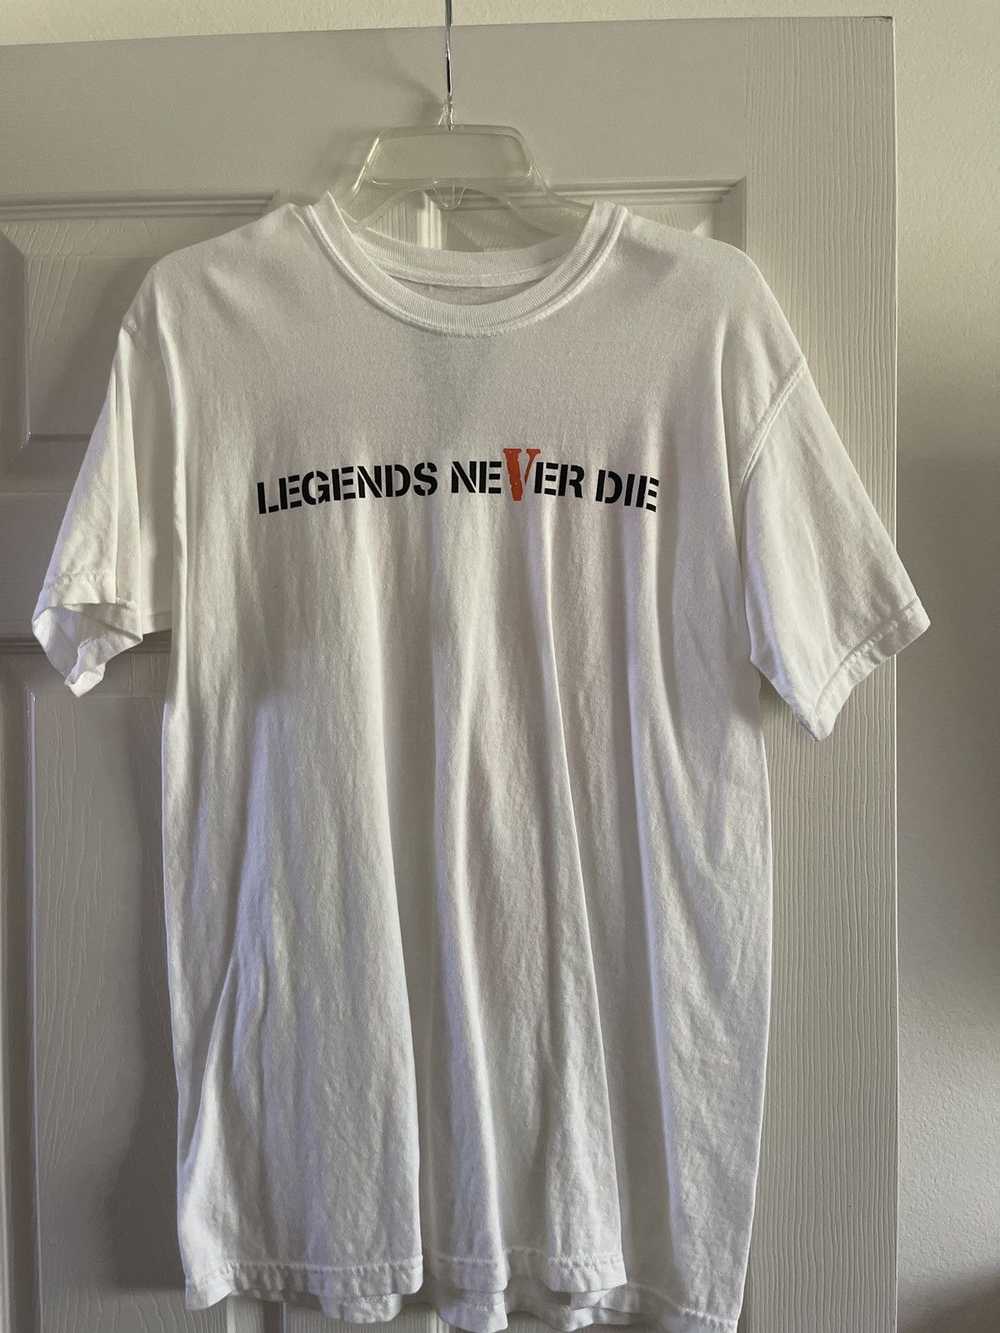 Vlone Vlone x Legends never die tshirt - image 1